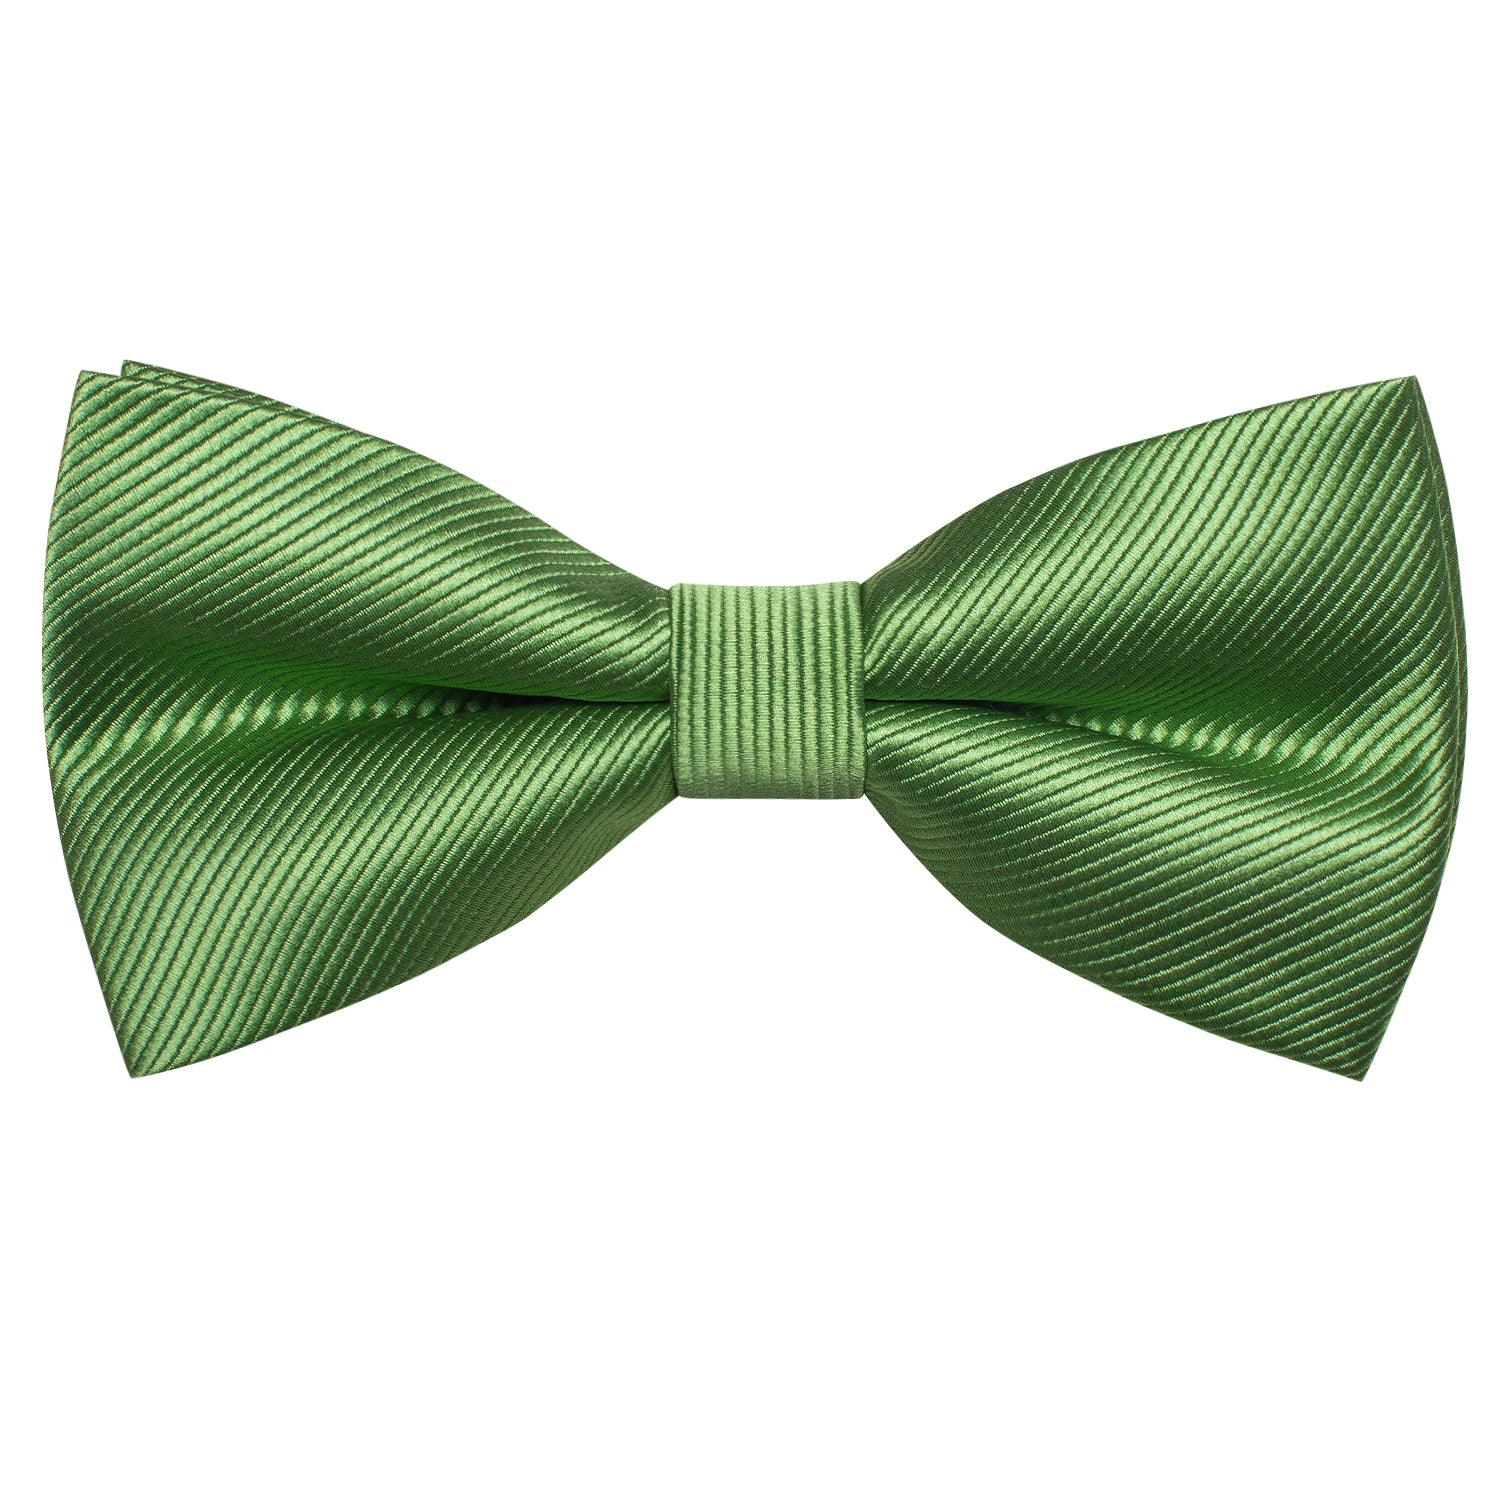 Olive Green Striped Pre-tied Bow Tie Hanky Cufflinks Set